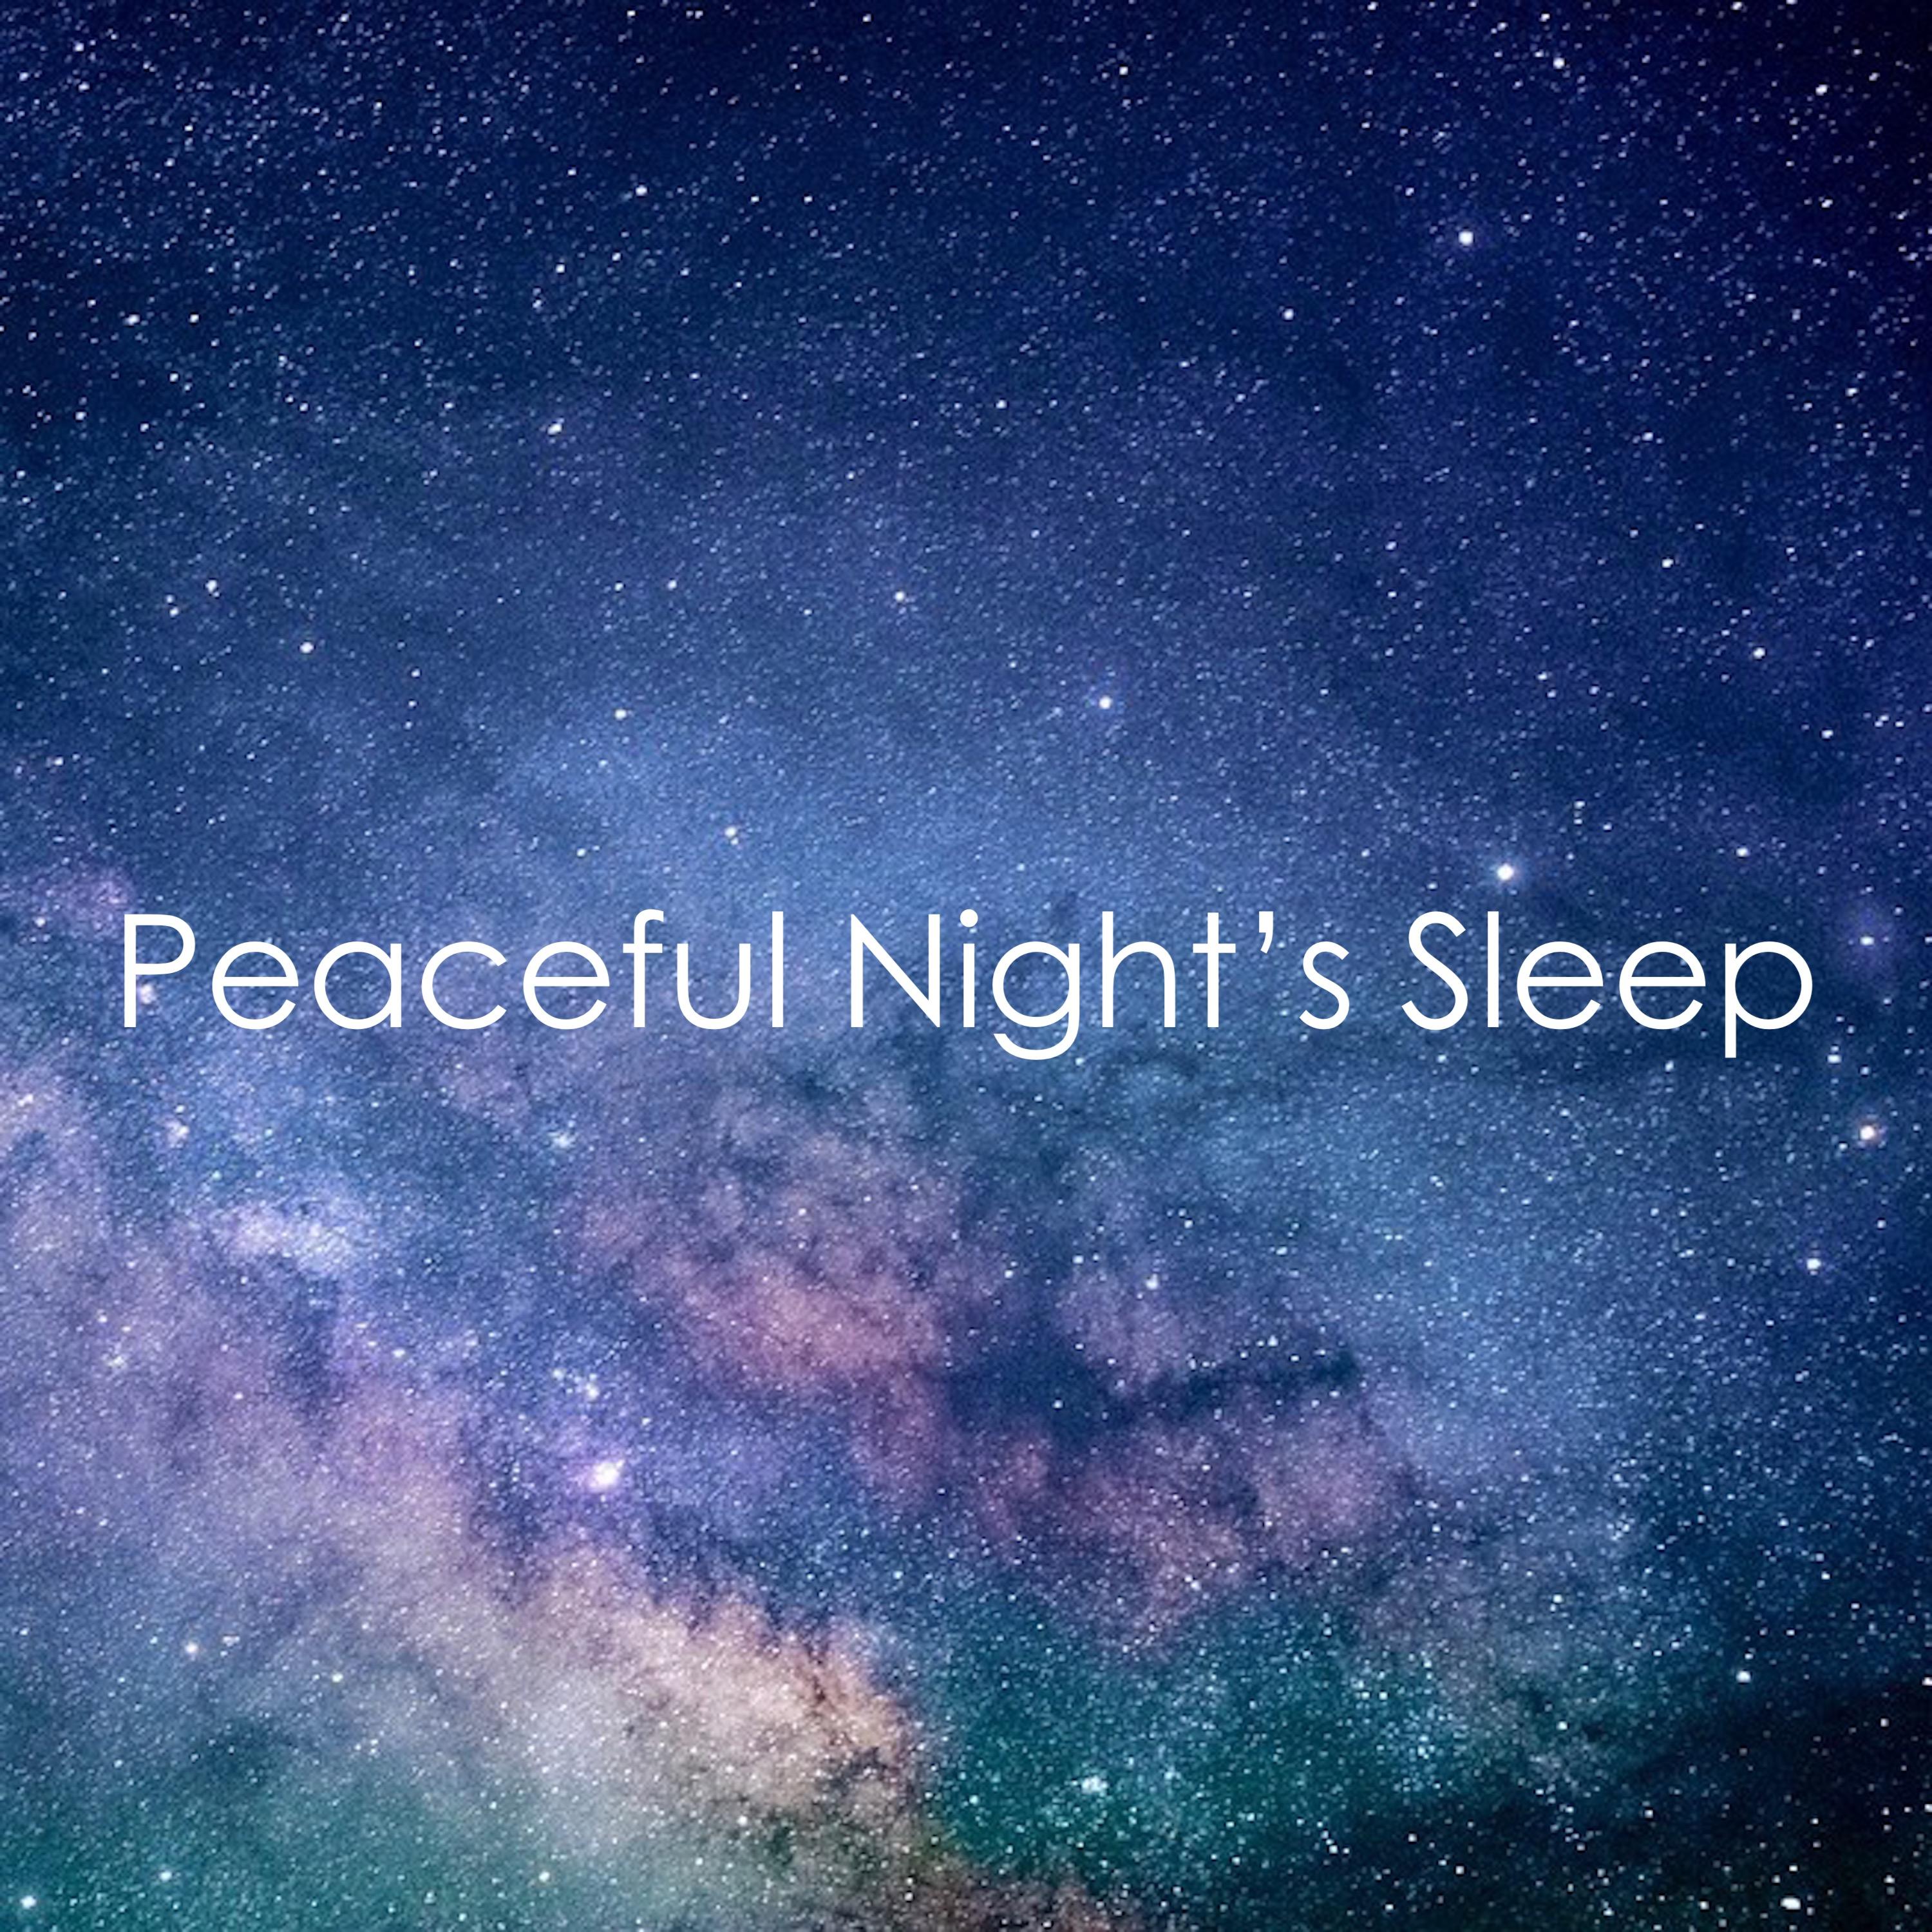 #2018 A Peaceful Night's Sleep: 9 Loopable Rain Sounds for Insomnia